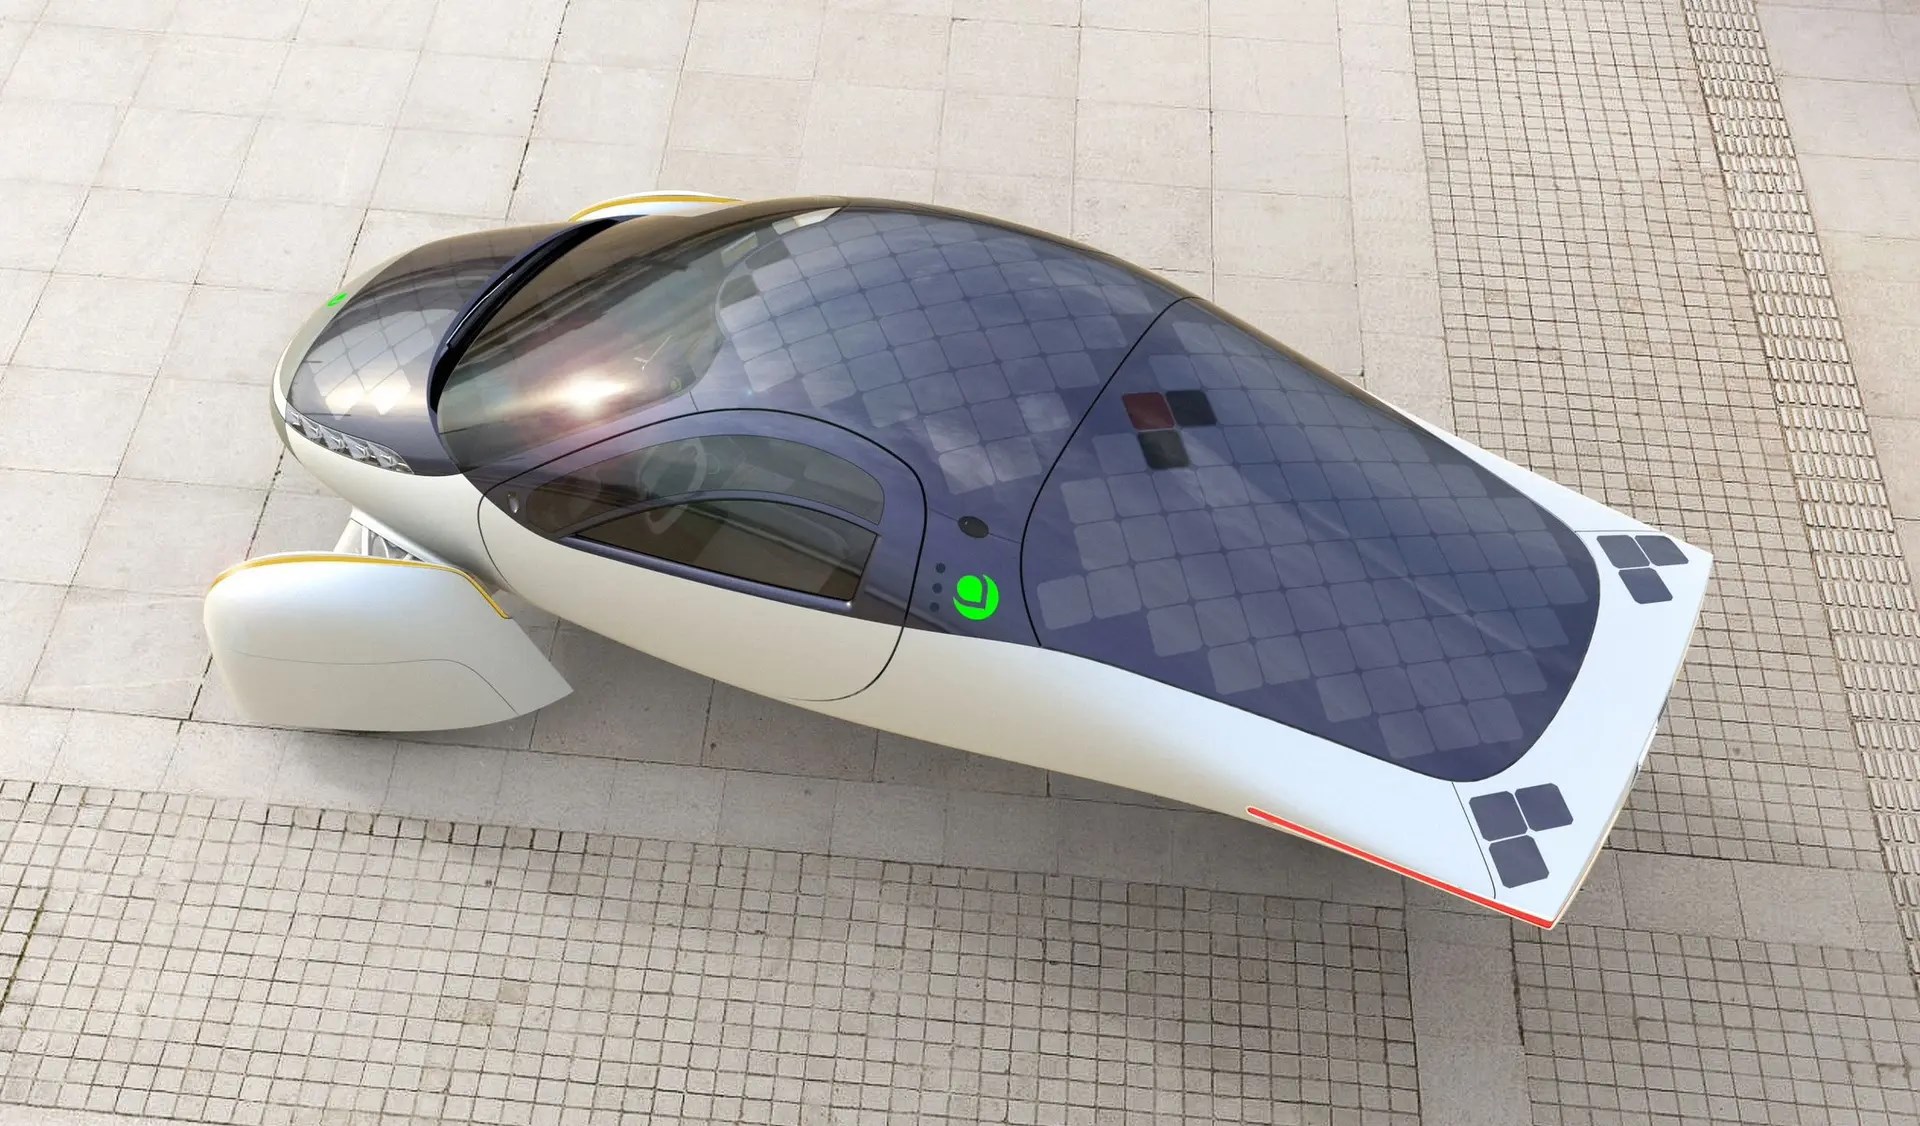 Solar elektrikli araç Aptera üretime hazır